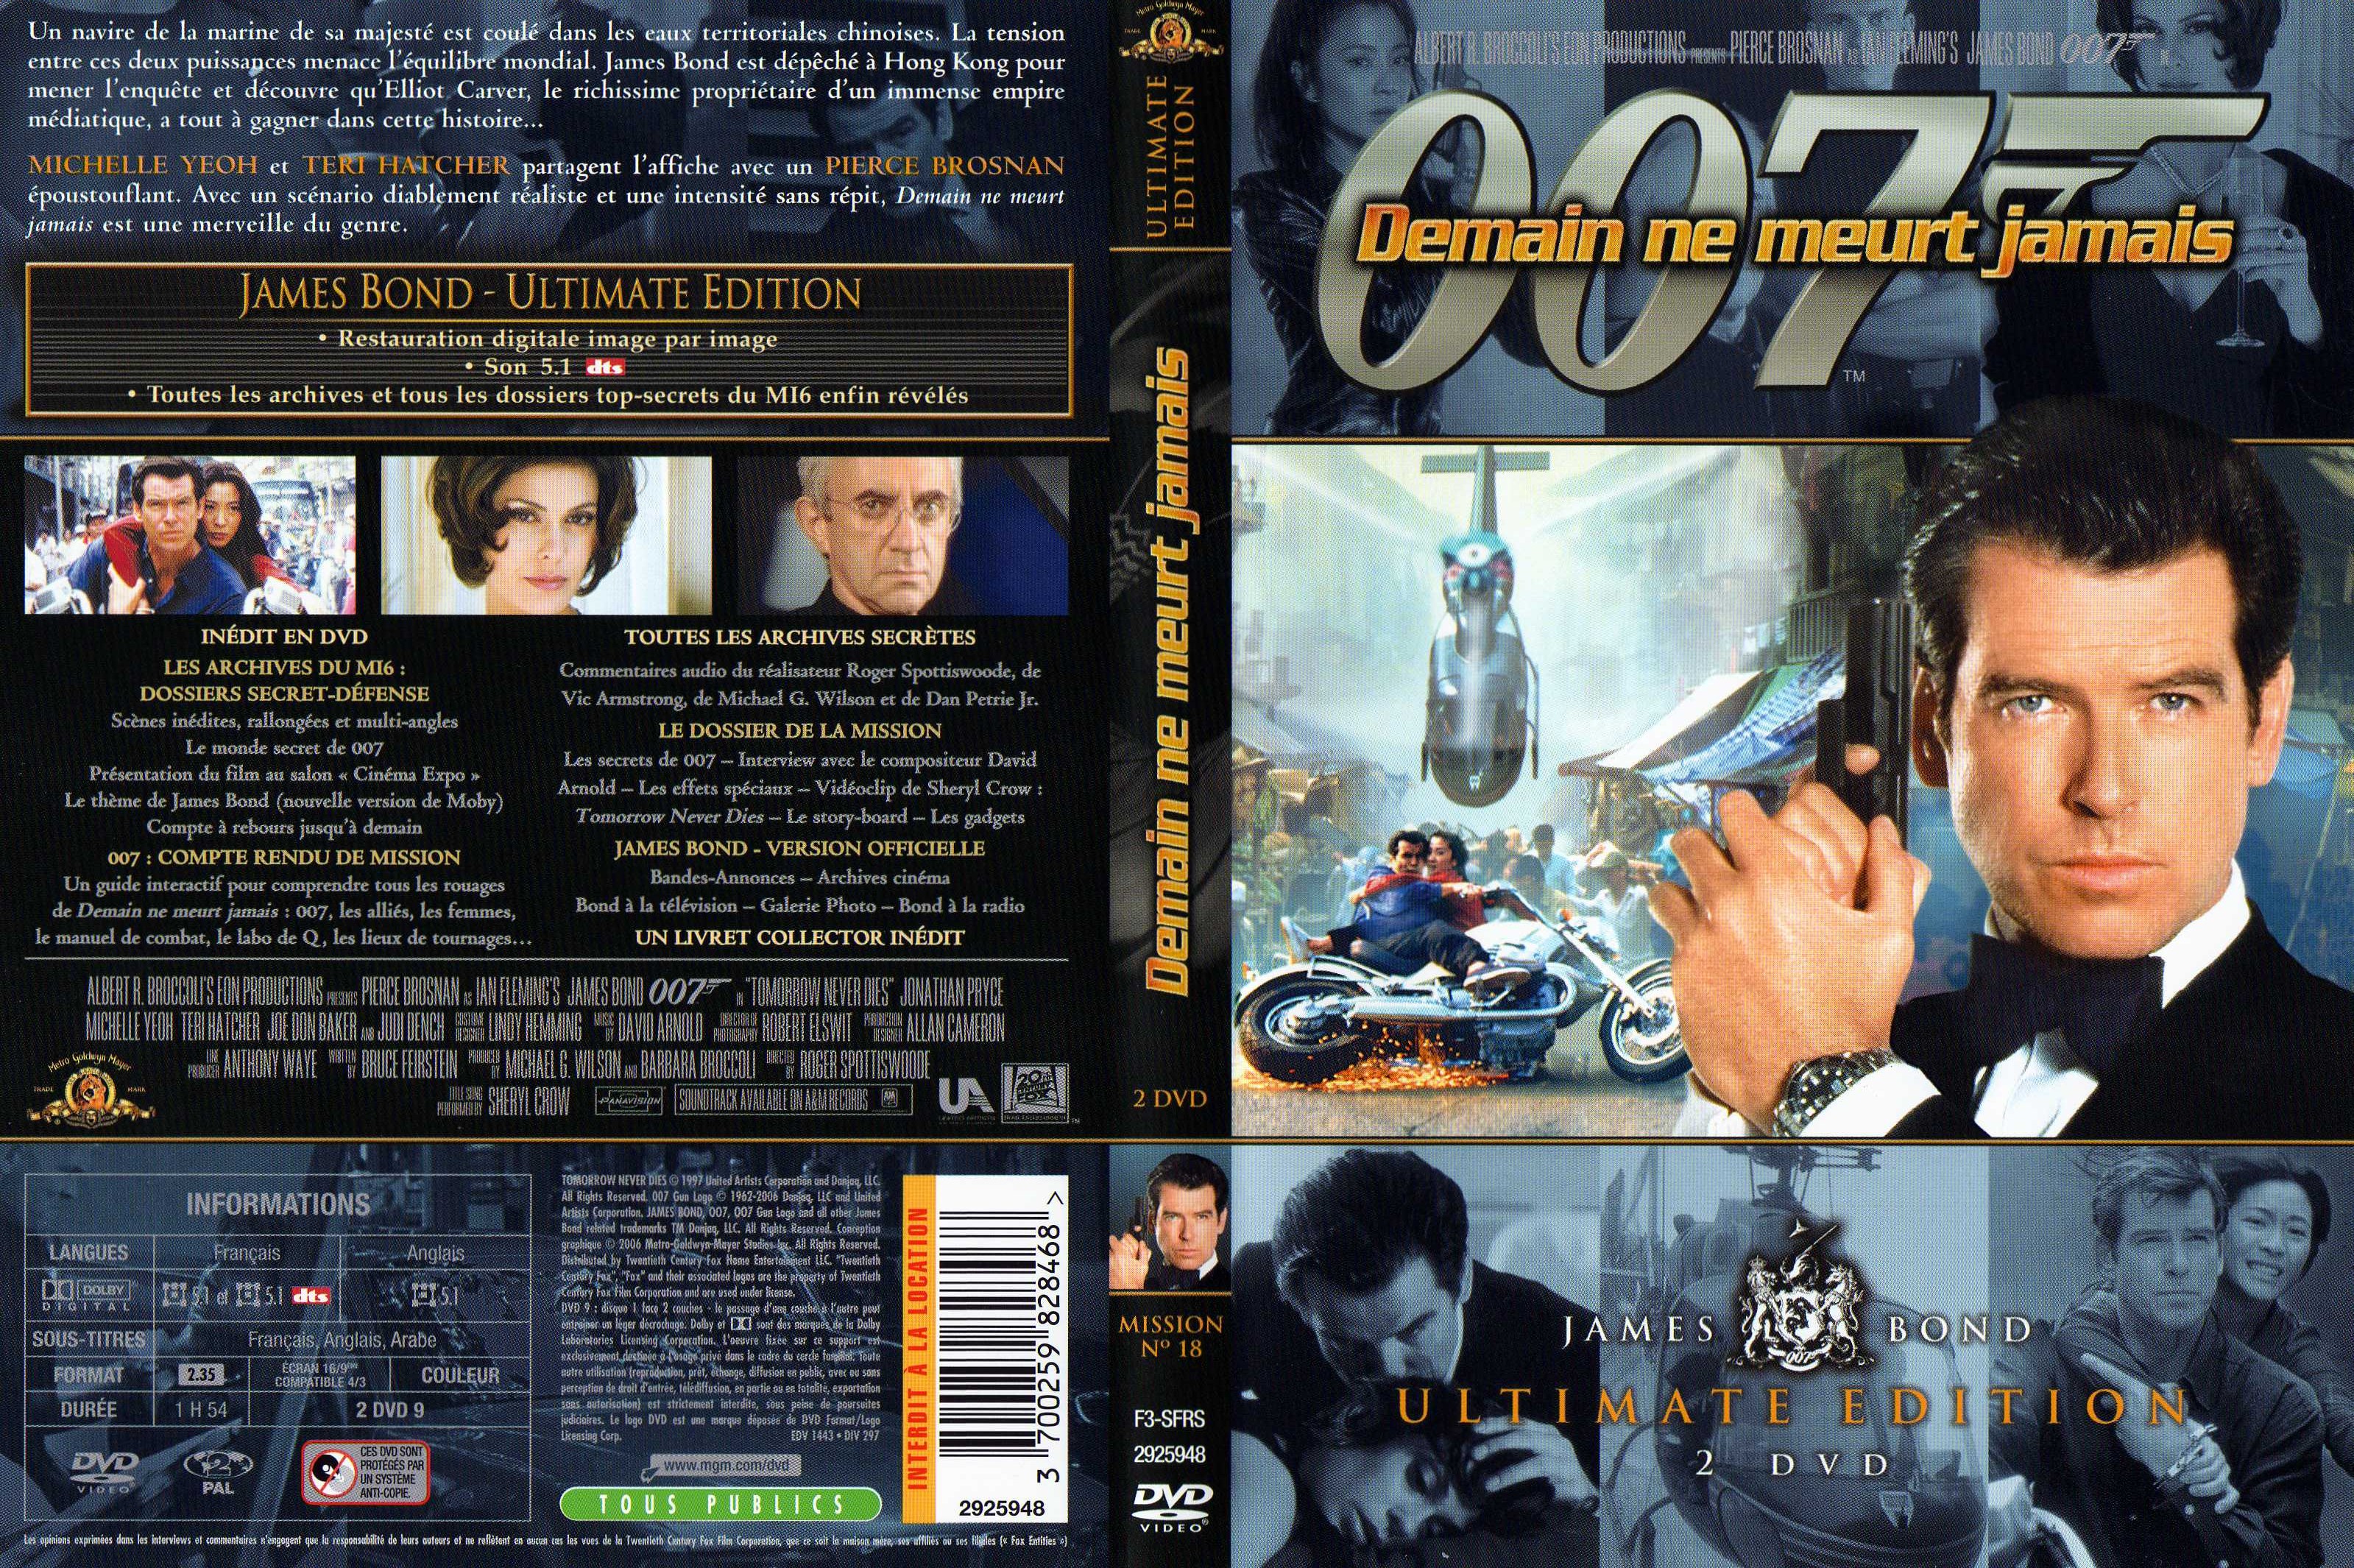 Jaquette DVD James Bond 007 Demain ne meurt jamais Ultimate Edition